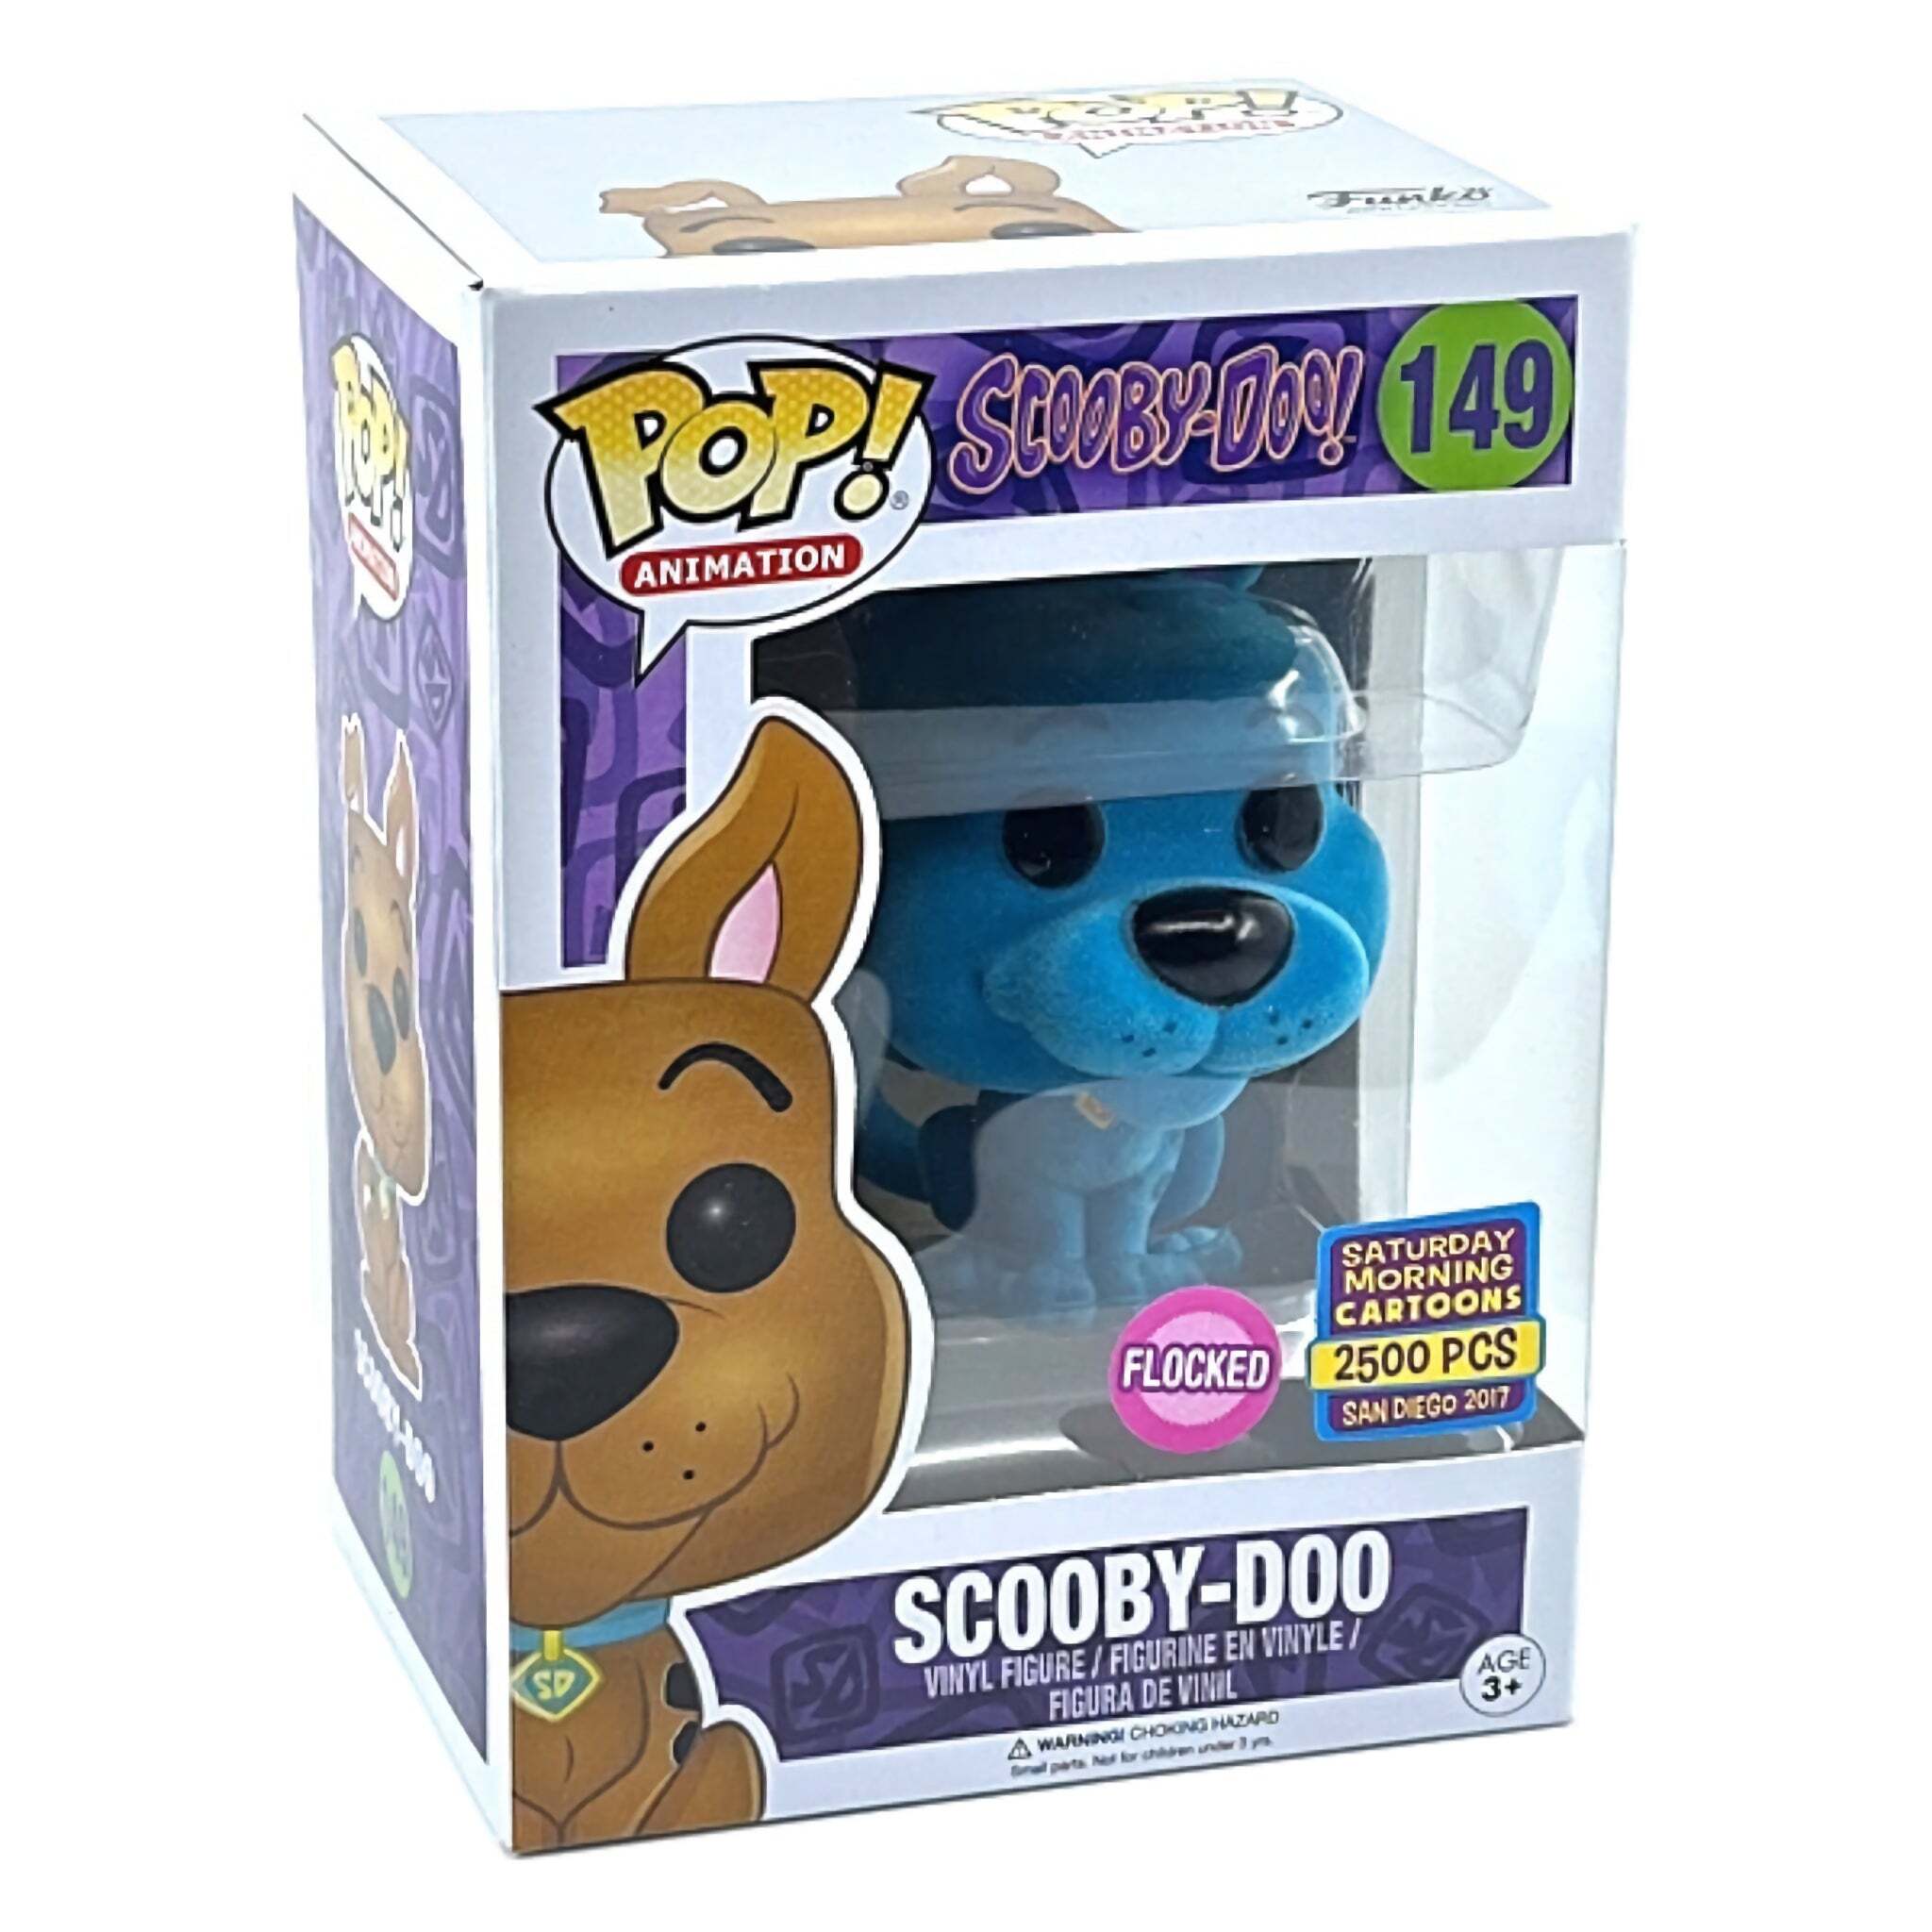 Scooby-Doo (Flocked) Funko Pop! 2017 SDCC 2500 PCS